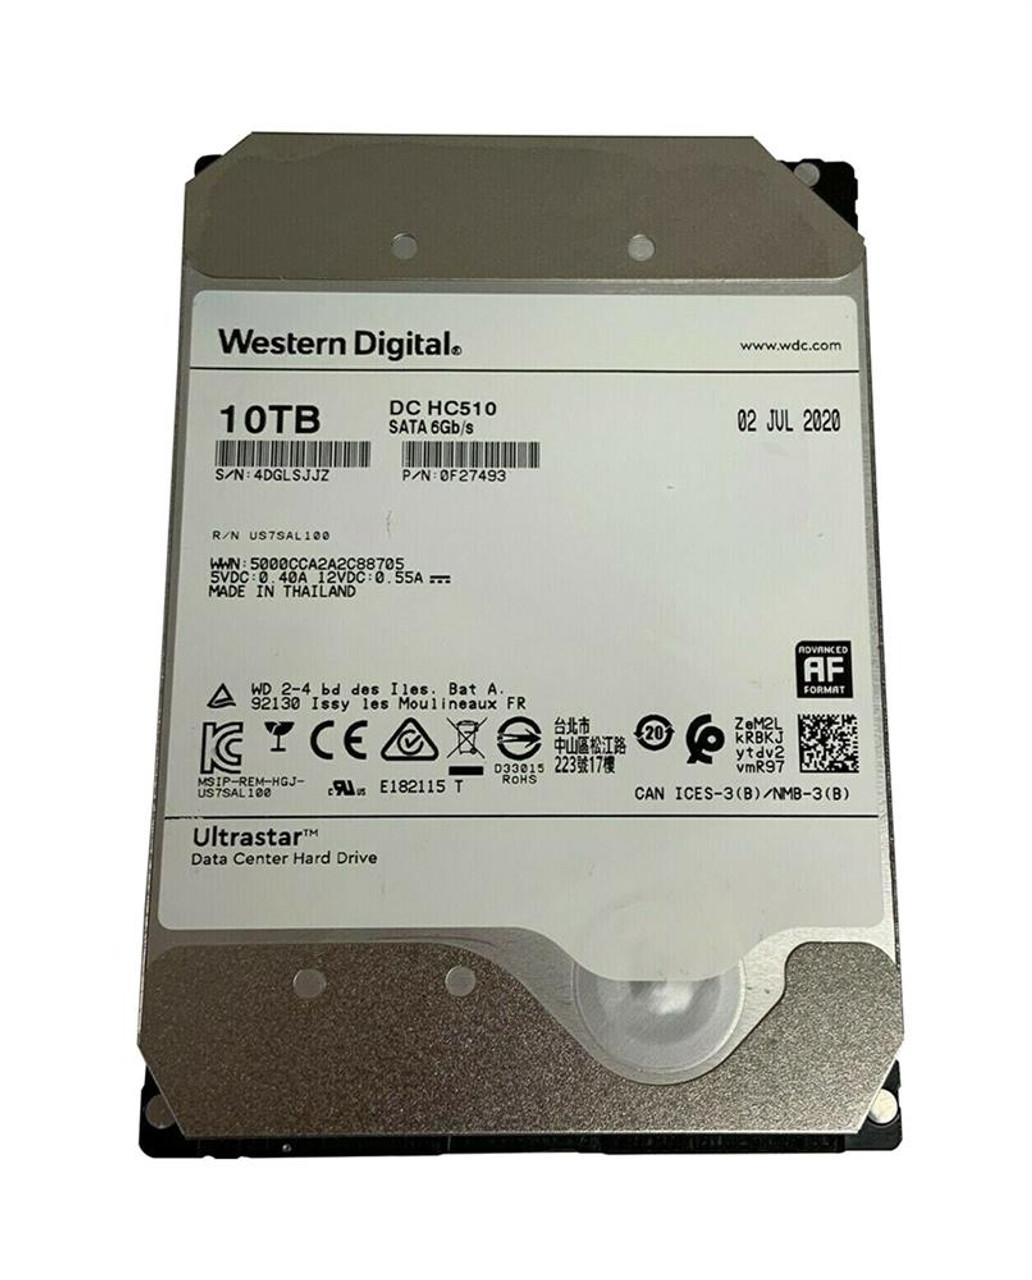 Western Digital Dc Hc 510 Ultrastar 10TB SATA 6GB S 3.5 Hard Drive A1